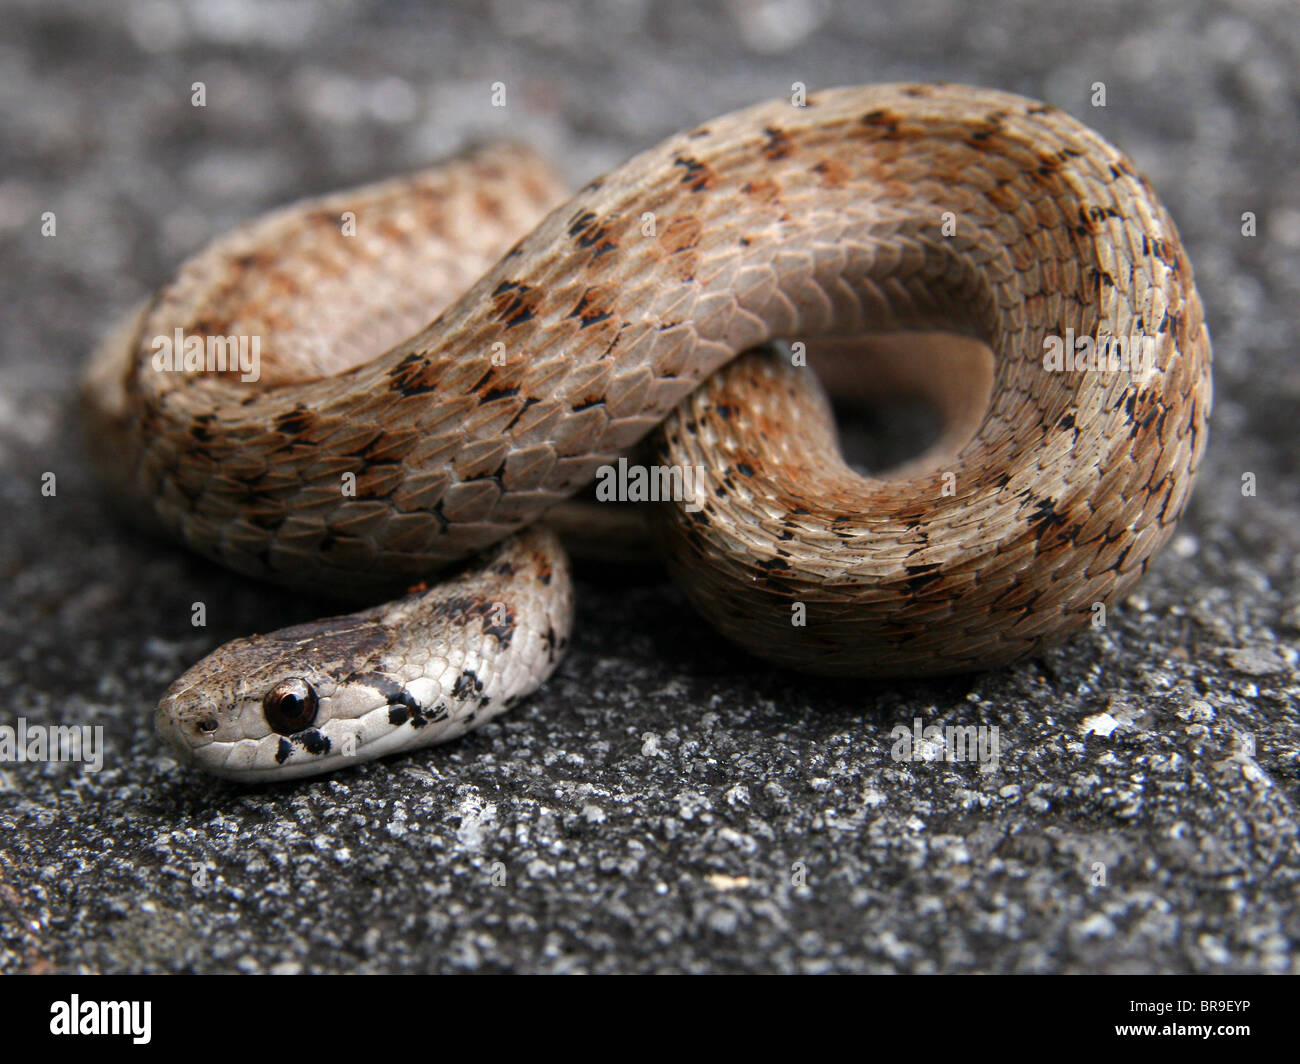 A Body Shot of a Northern Brown or DeKay's Snake (Storeria dekayi) Stock Photo